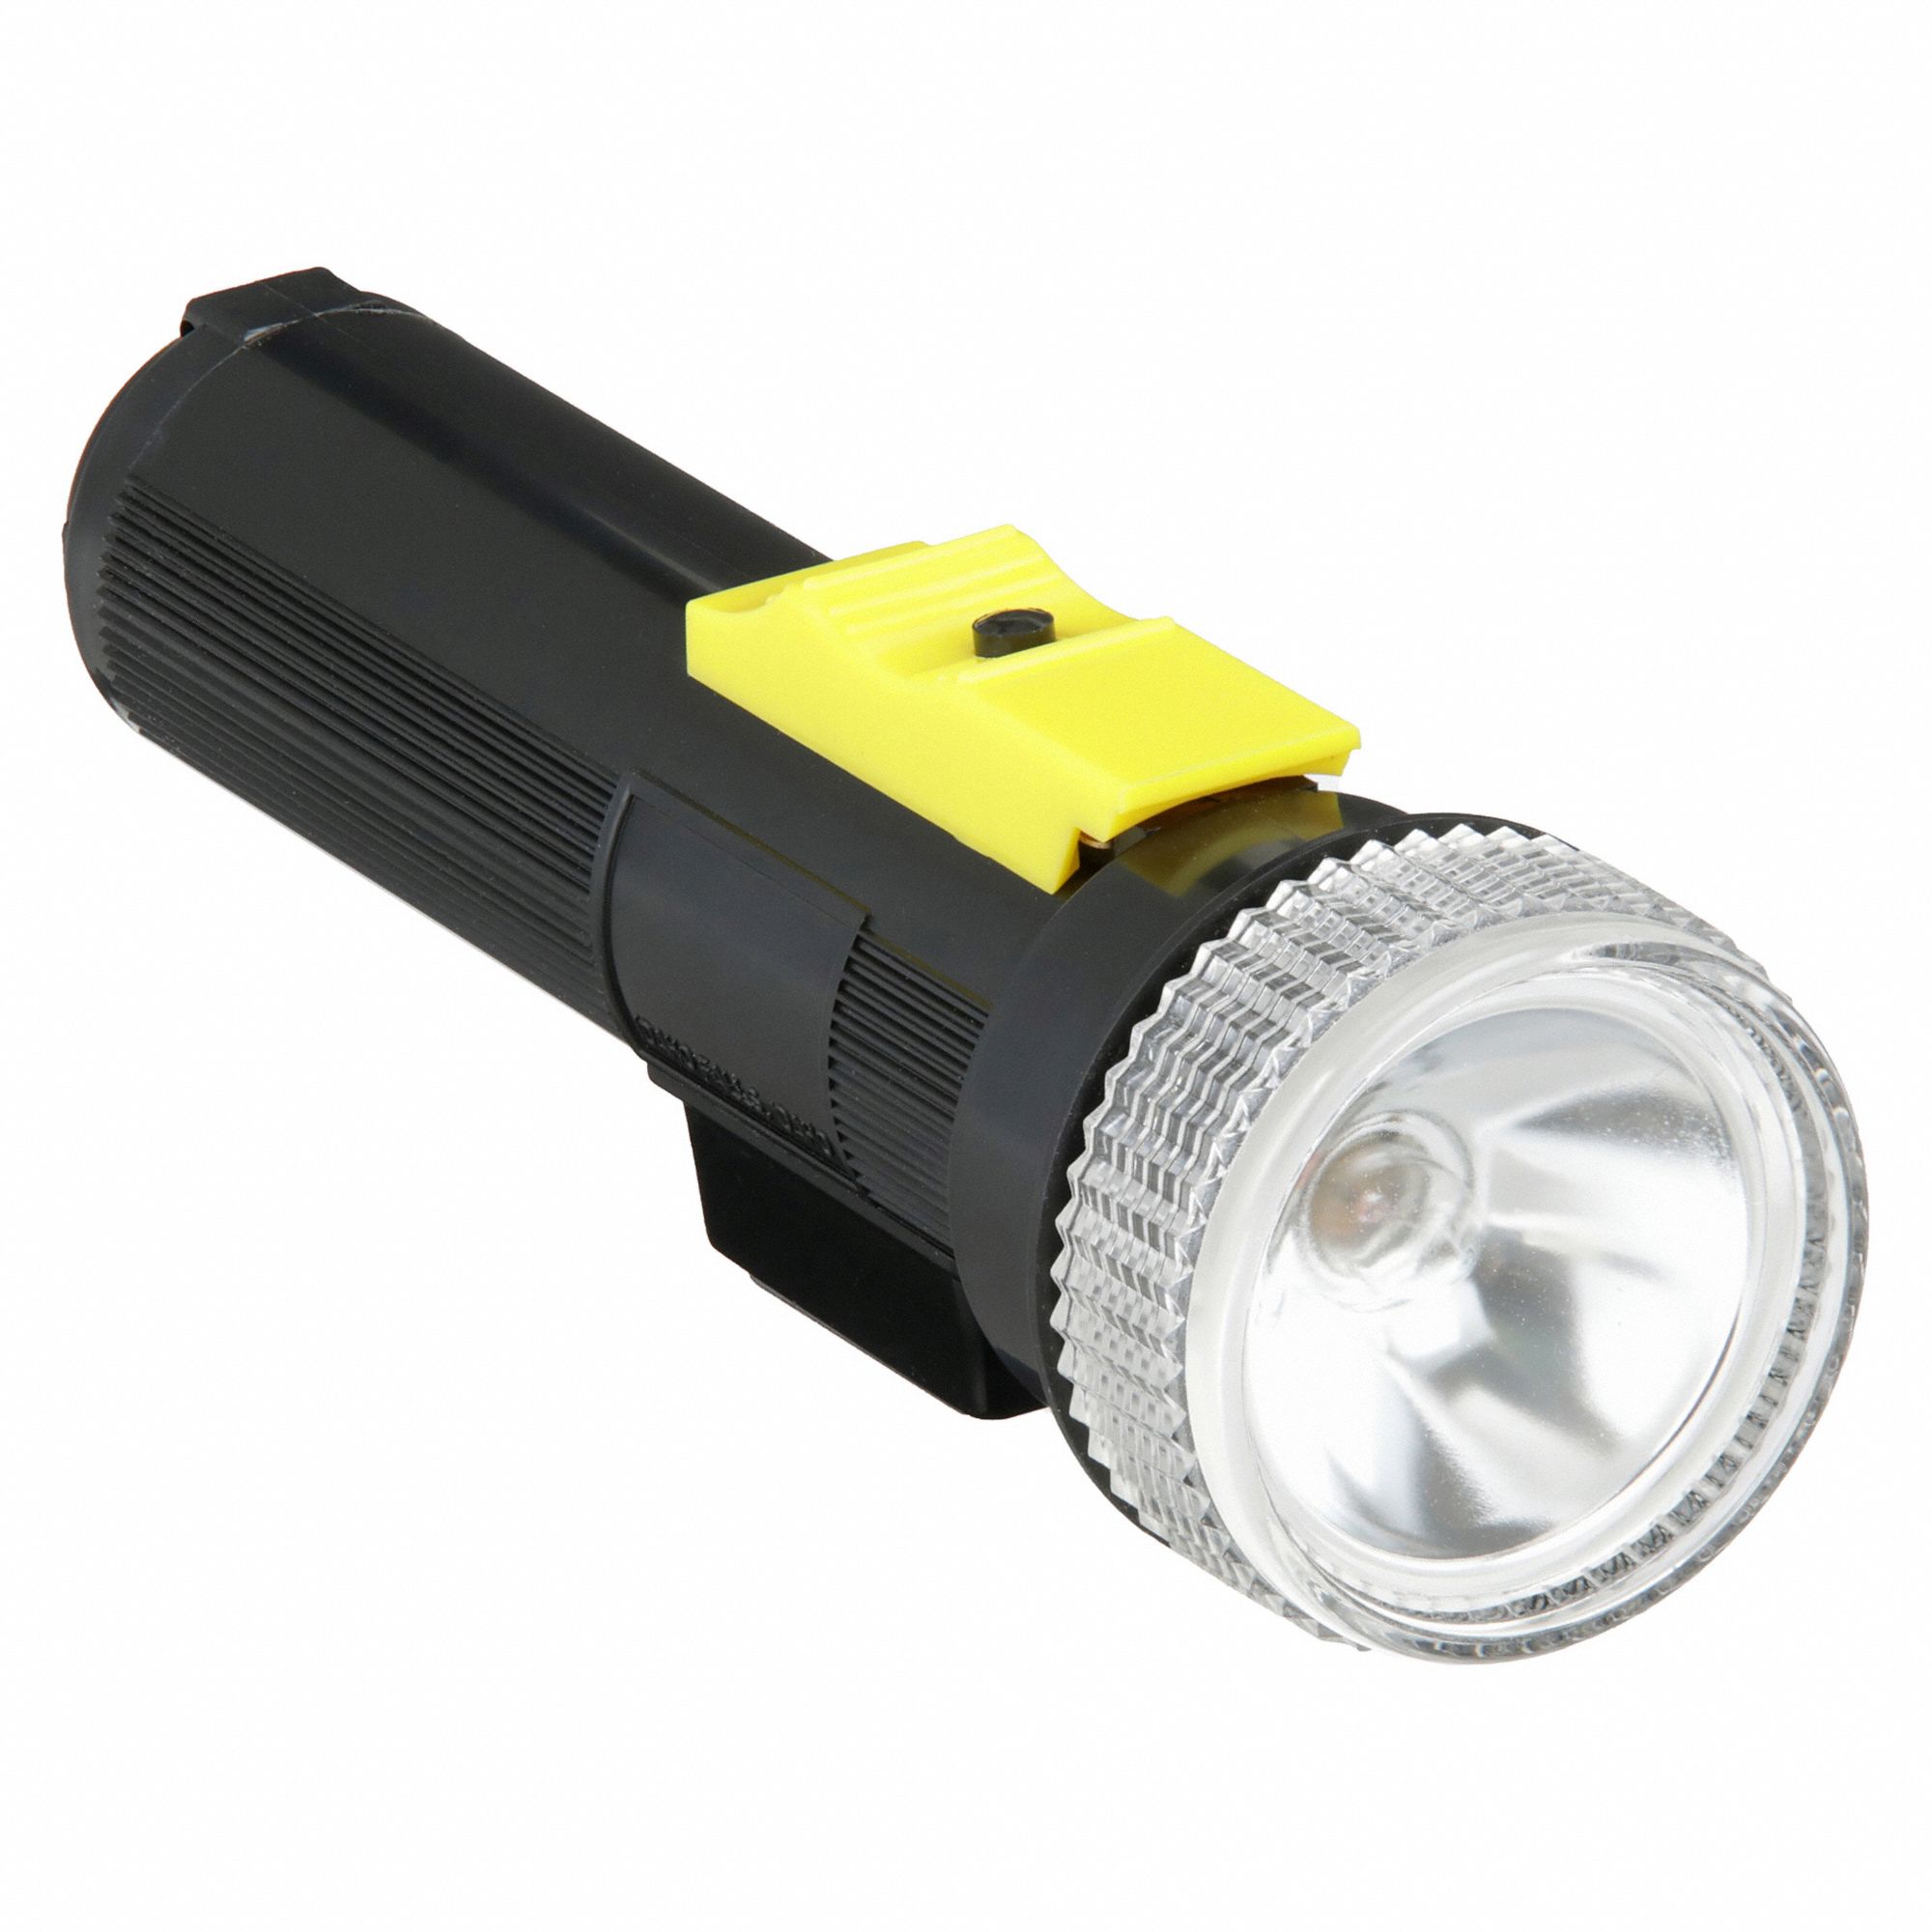 Flashlights - Headlamps, Lanterns & Handhelds - Grainger